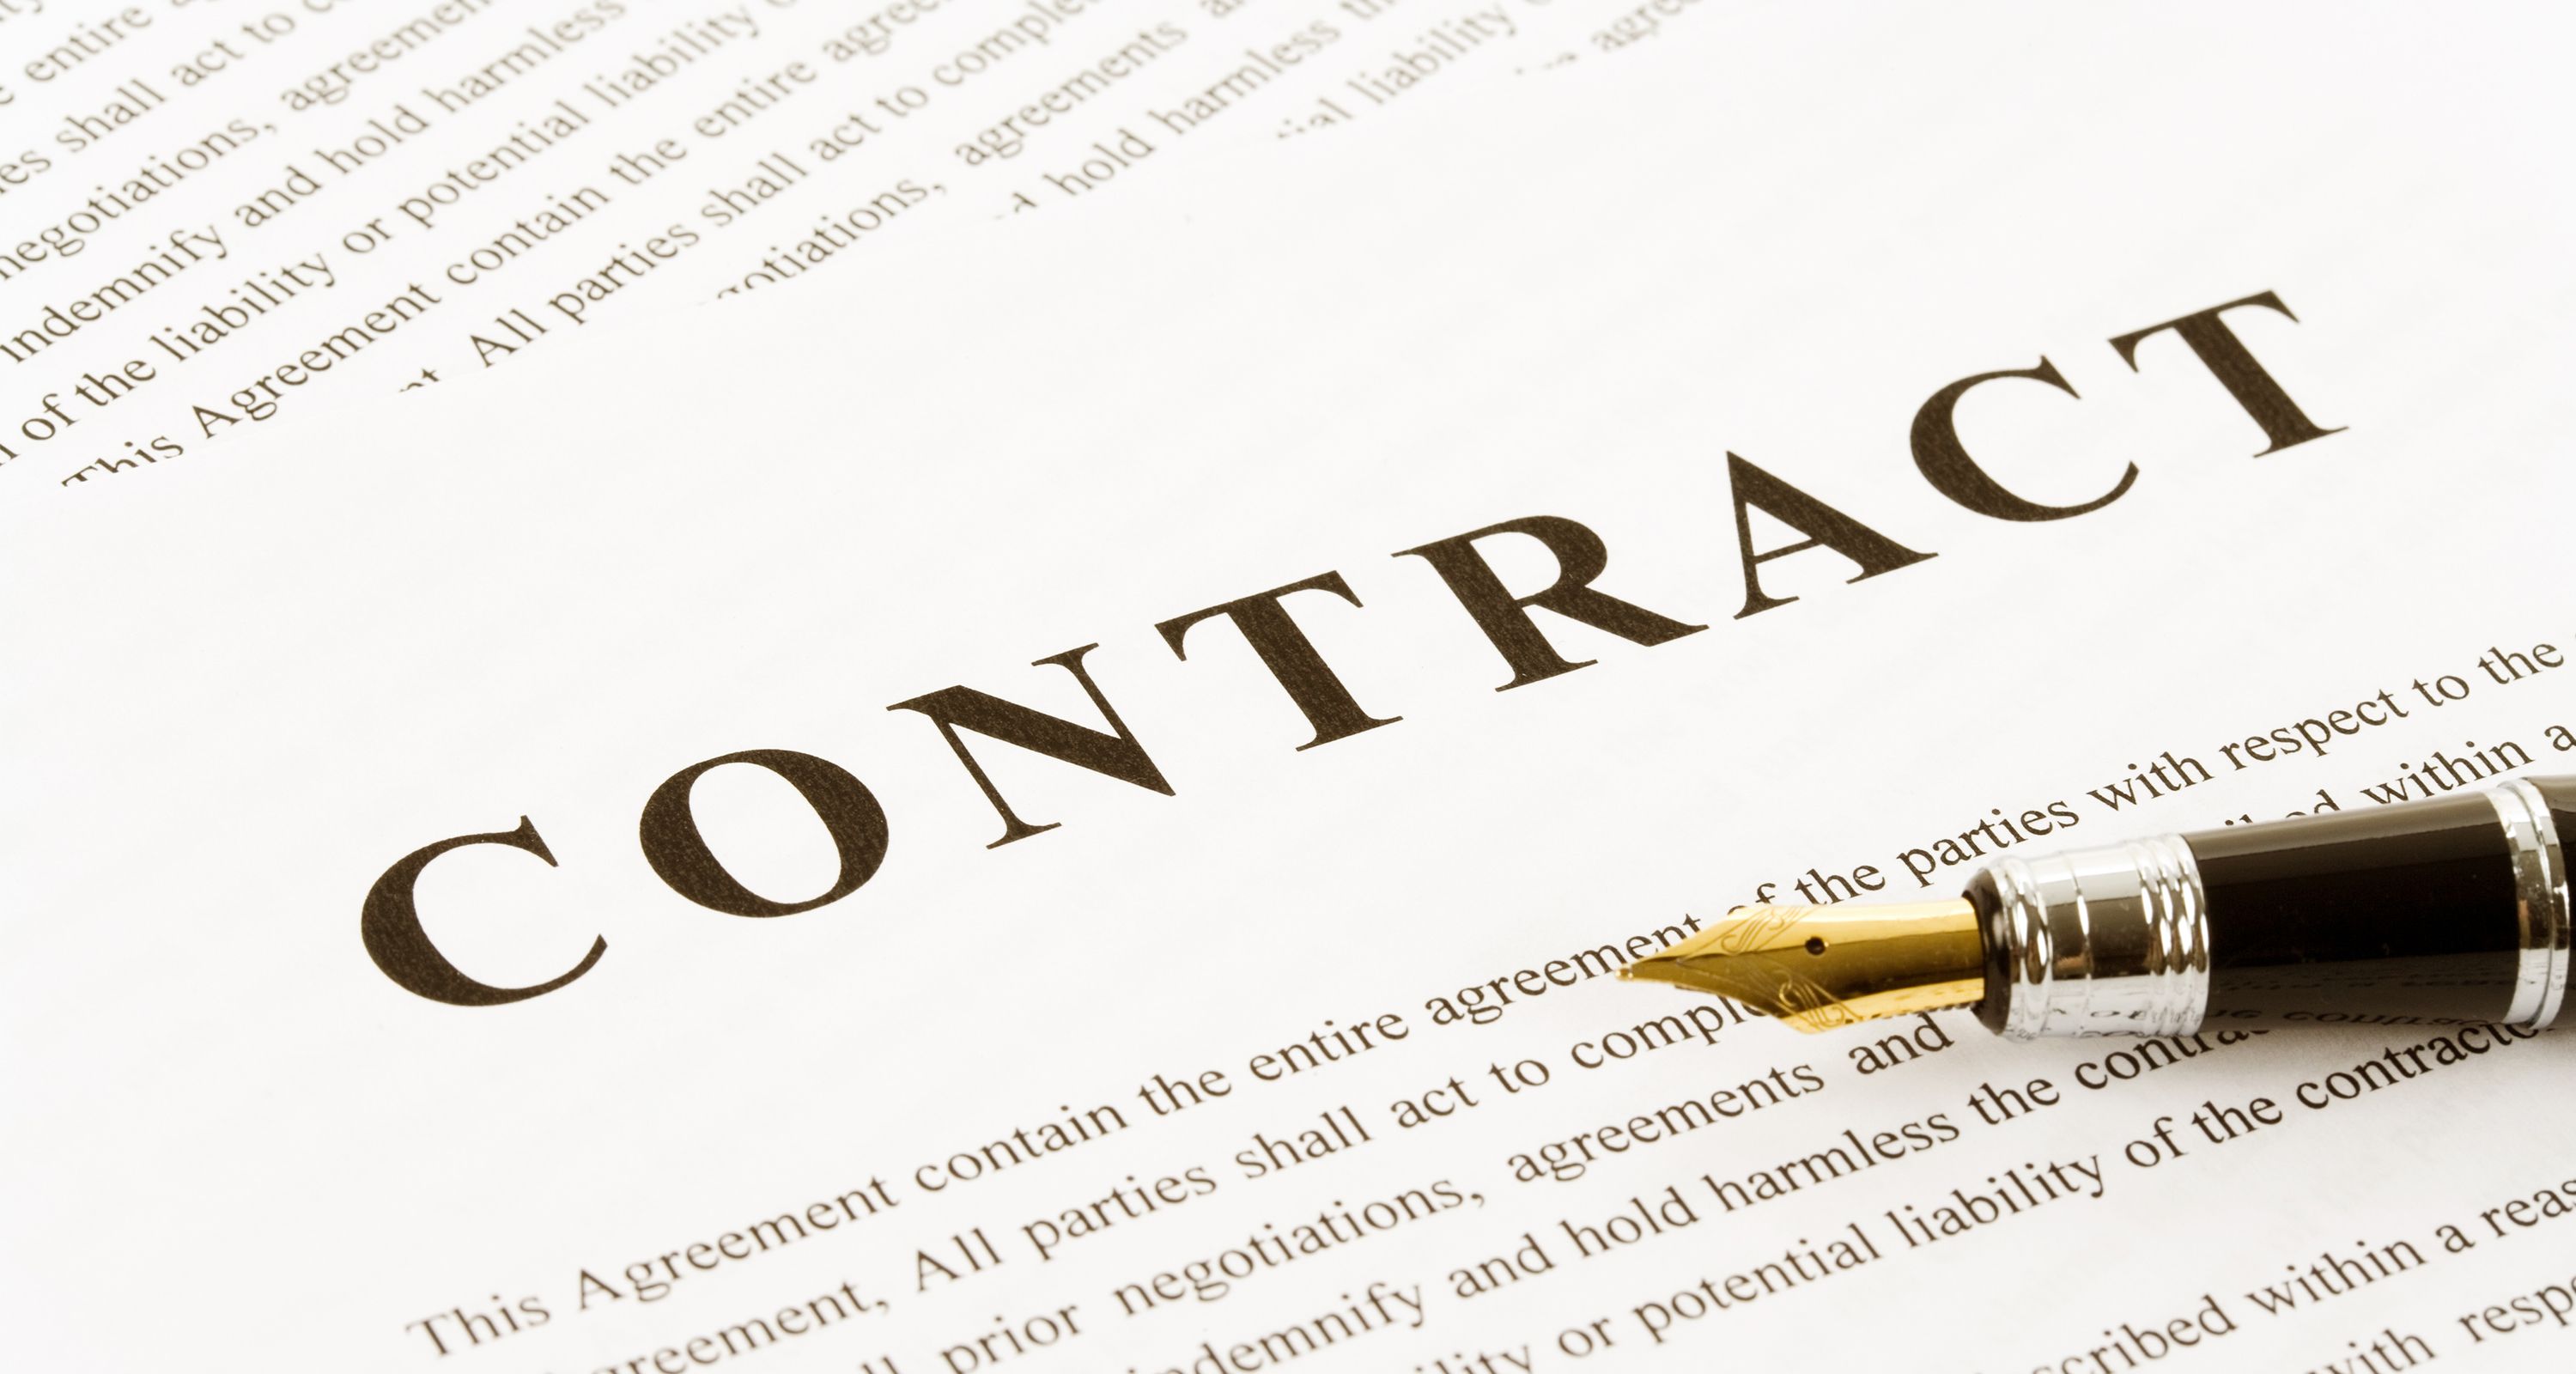 define representation in contract law